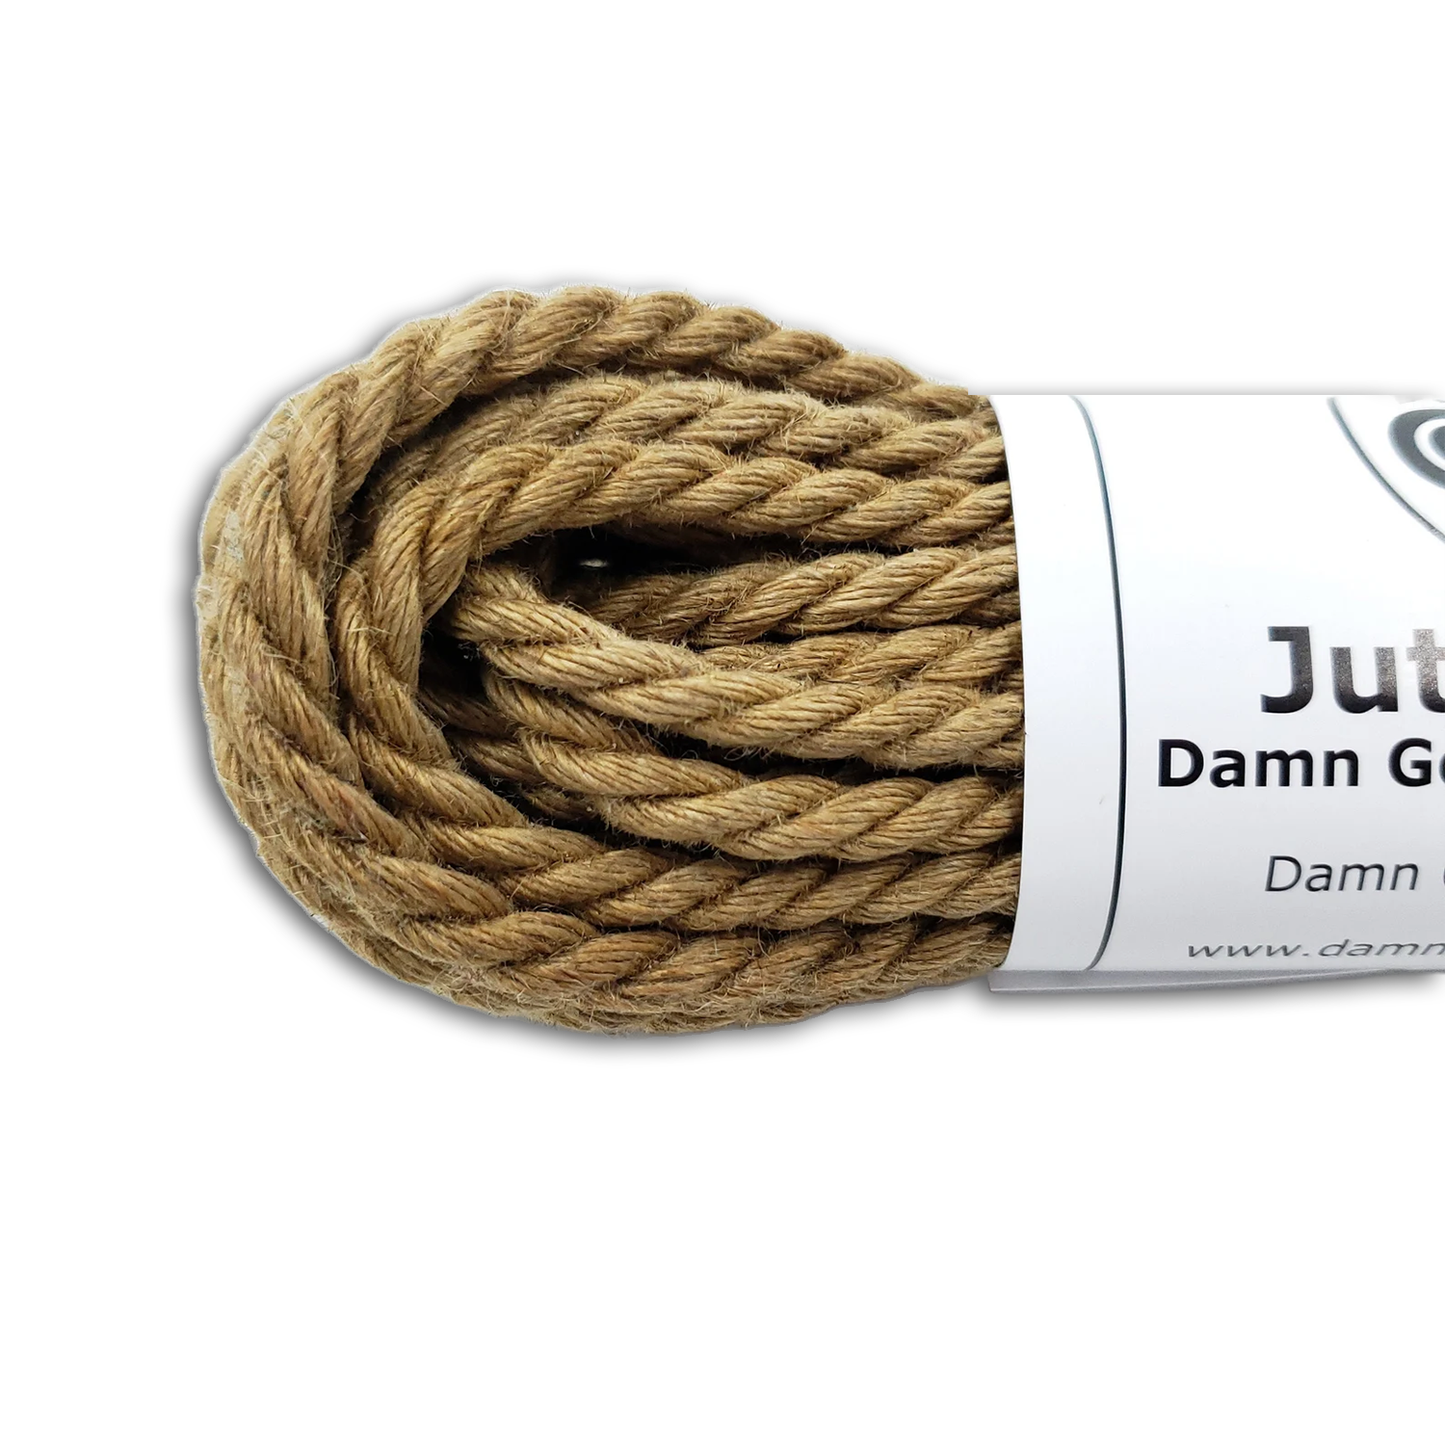 Jute by Damn Good Rope Company